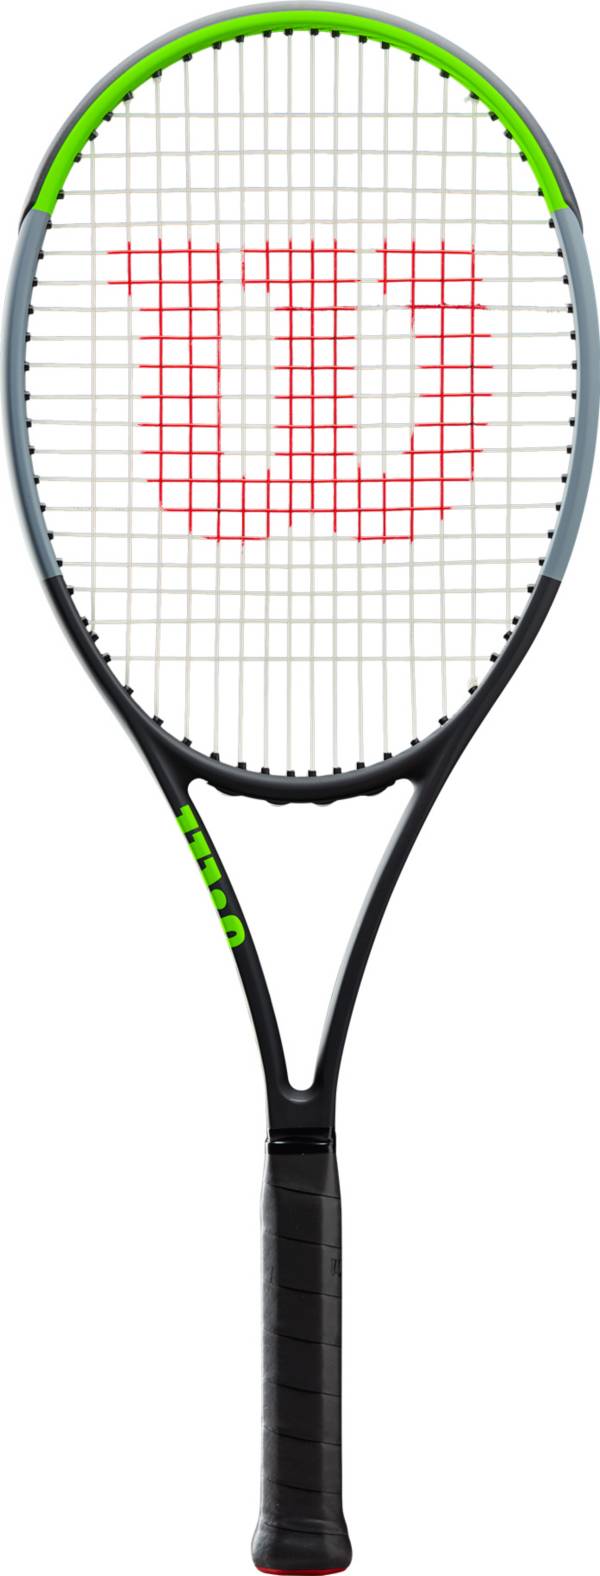 Wilson Blade 98 16x19 V7 Tennis Racquet - Unstrung product image